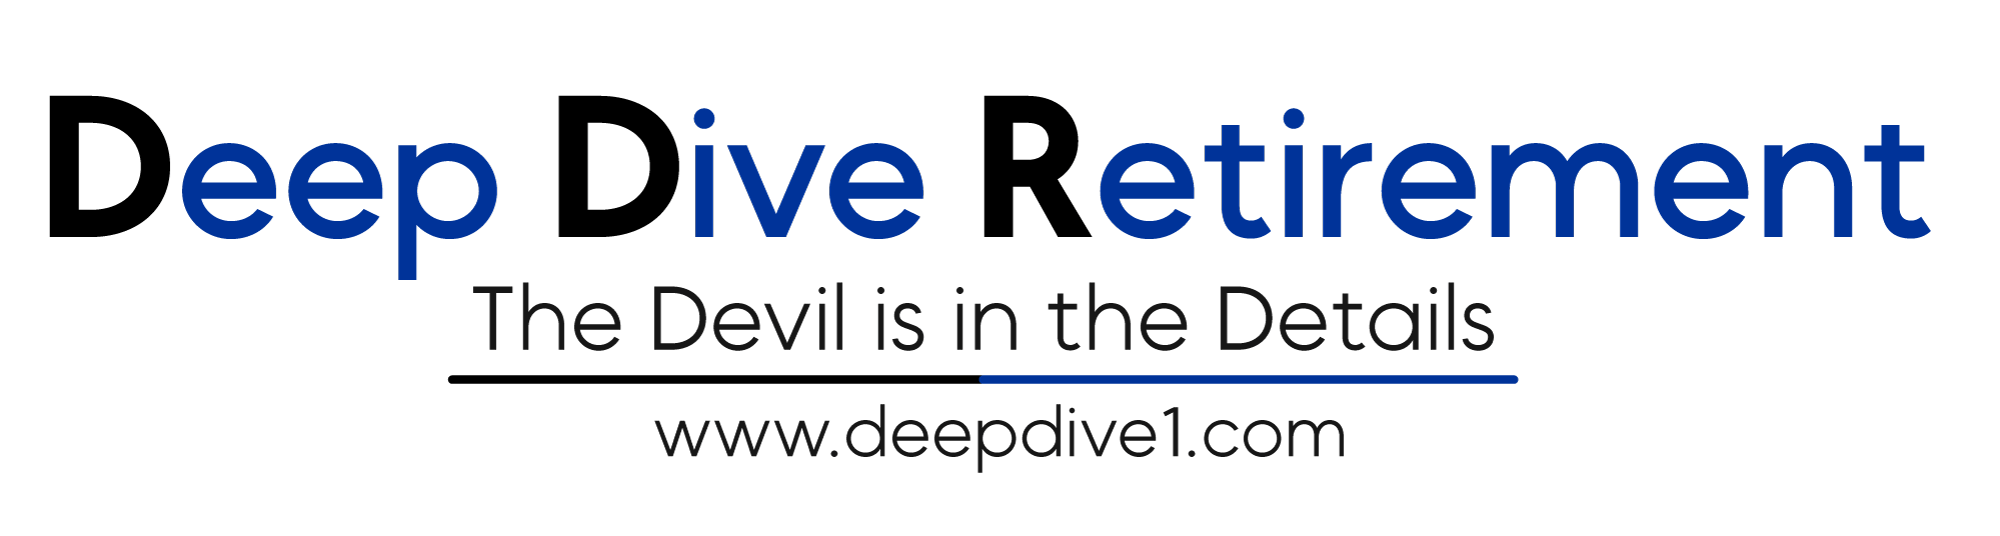 Deep Dive Retirement